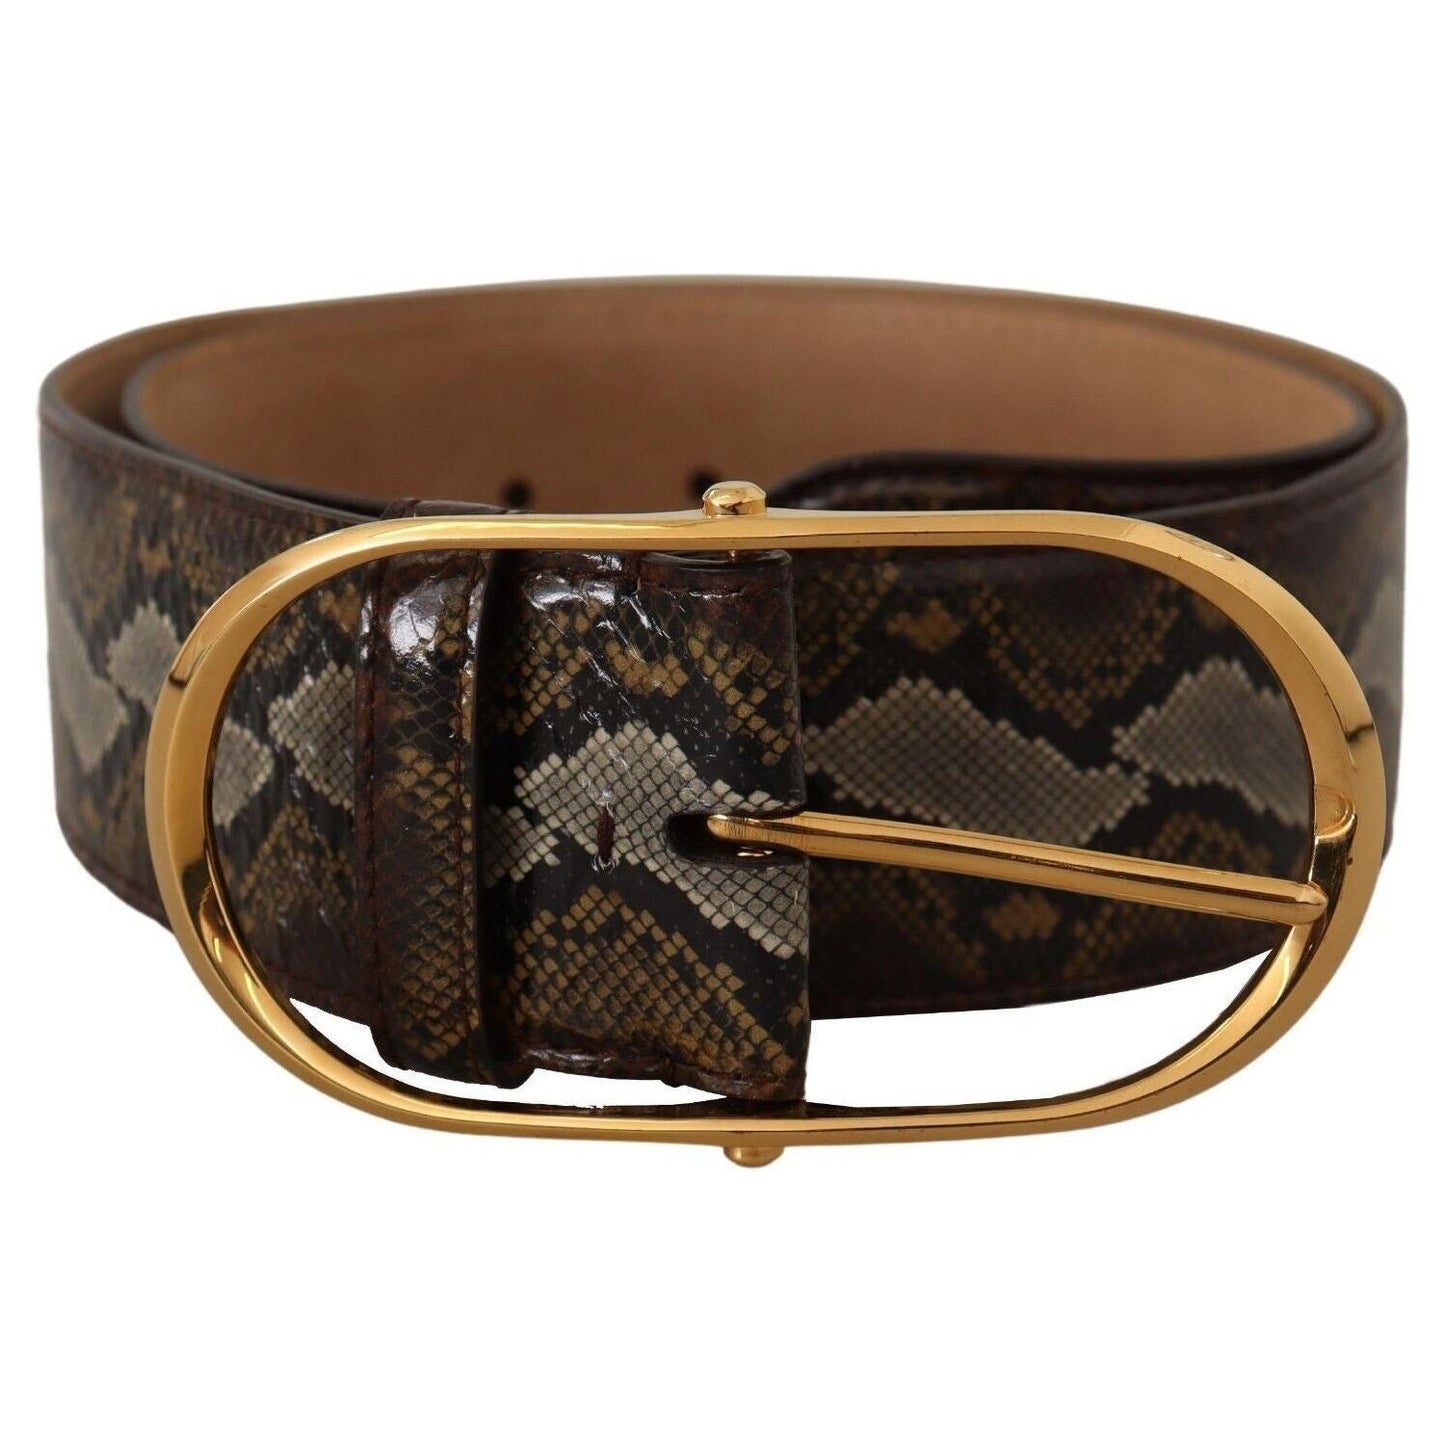 Dolce & Gabbana Elegant Gold Oval Buckle Leather Belt brown-python-leather-gold-oval-buckle-belt WOMAN BELTS s-l1600-2-275-5b721c75-e0e.jpg